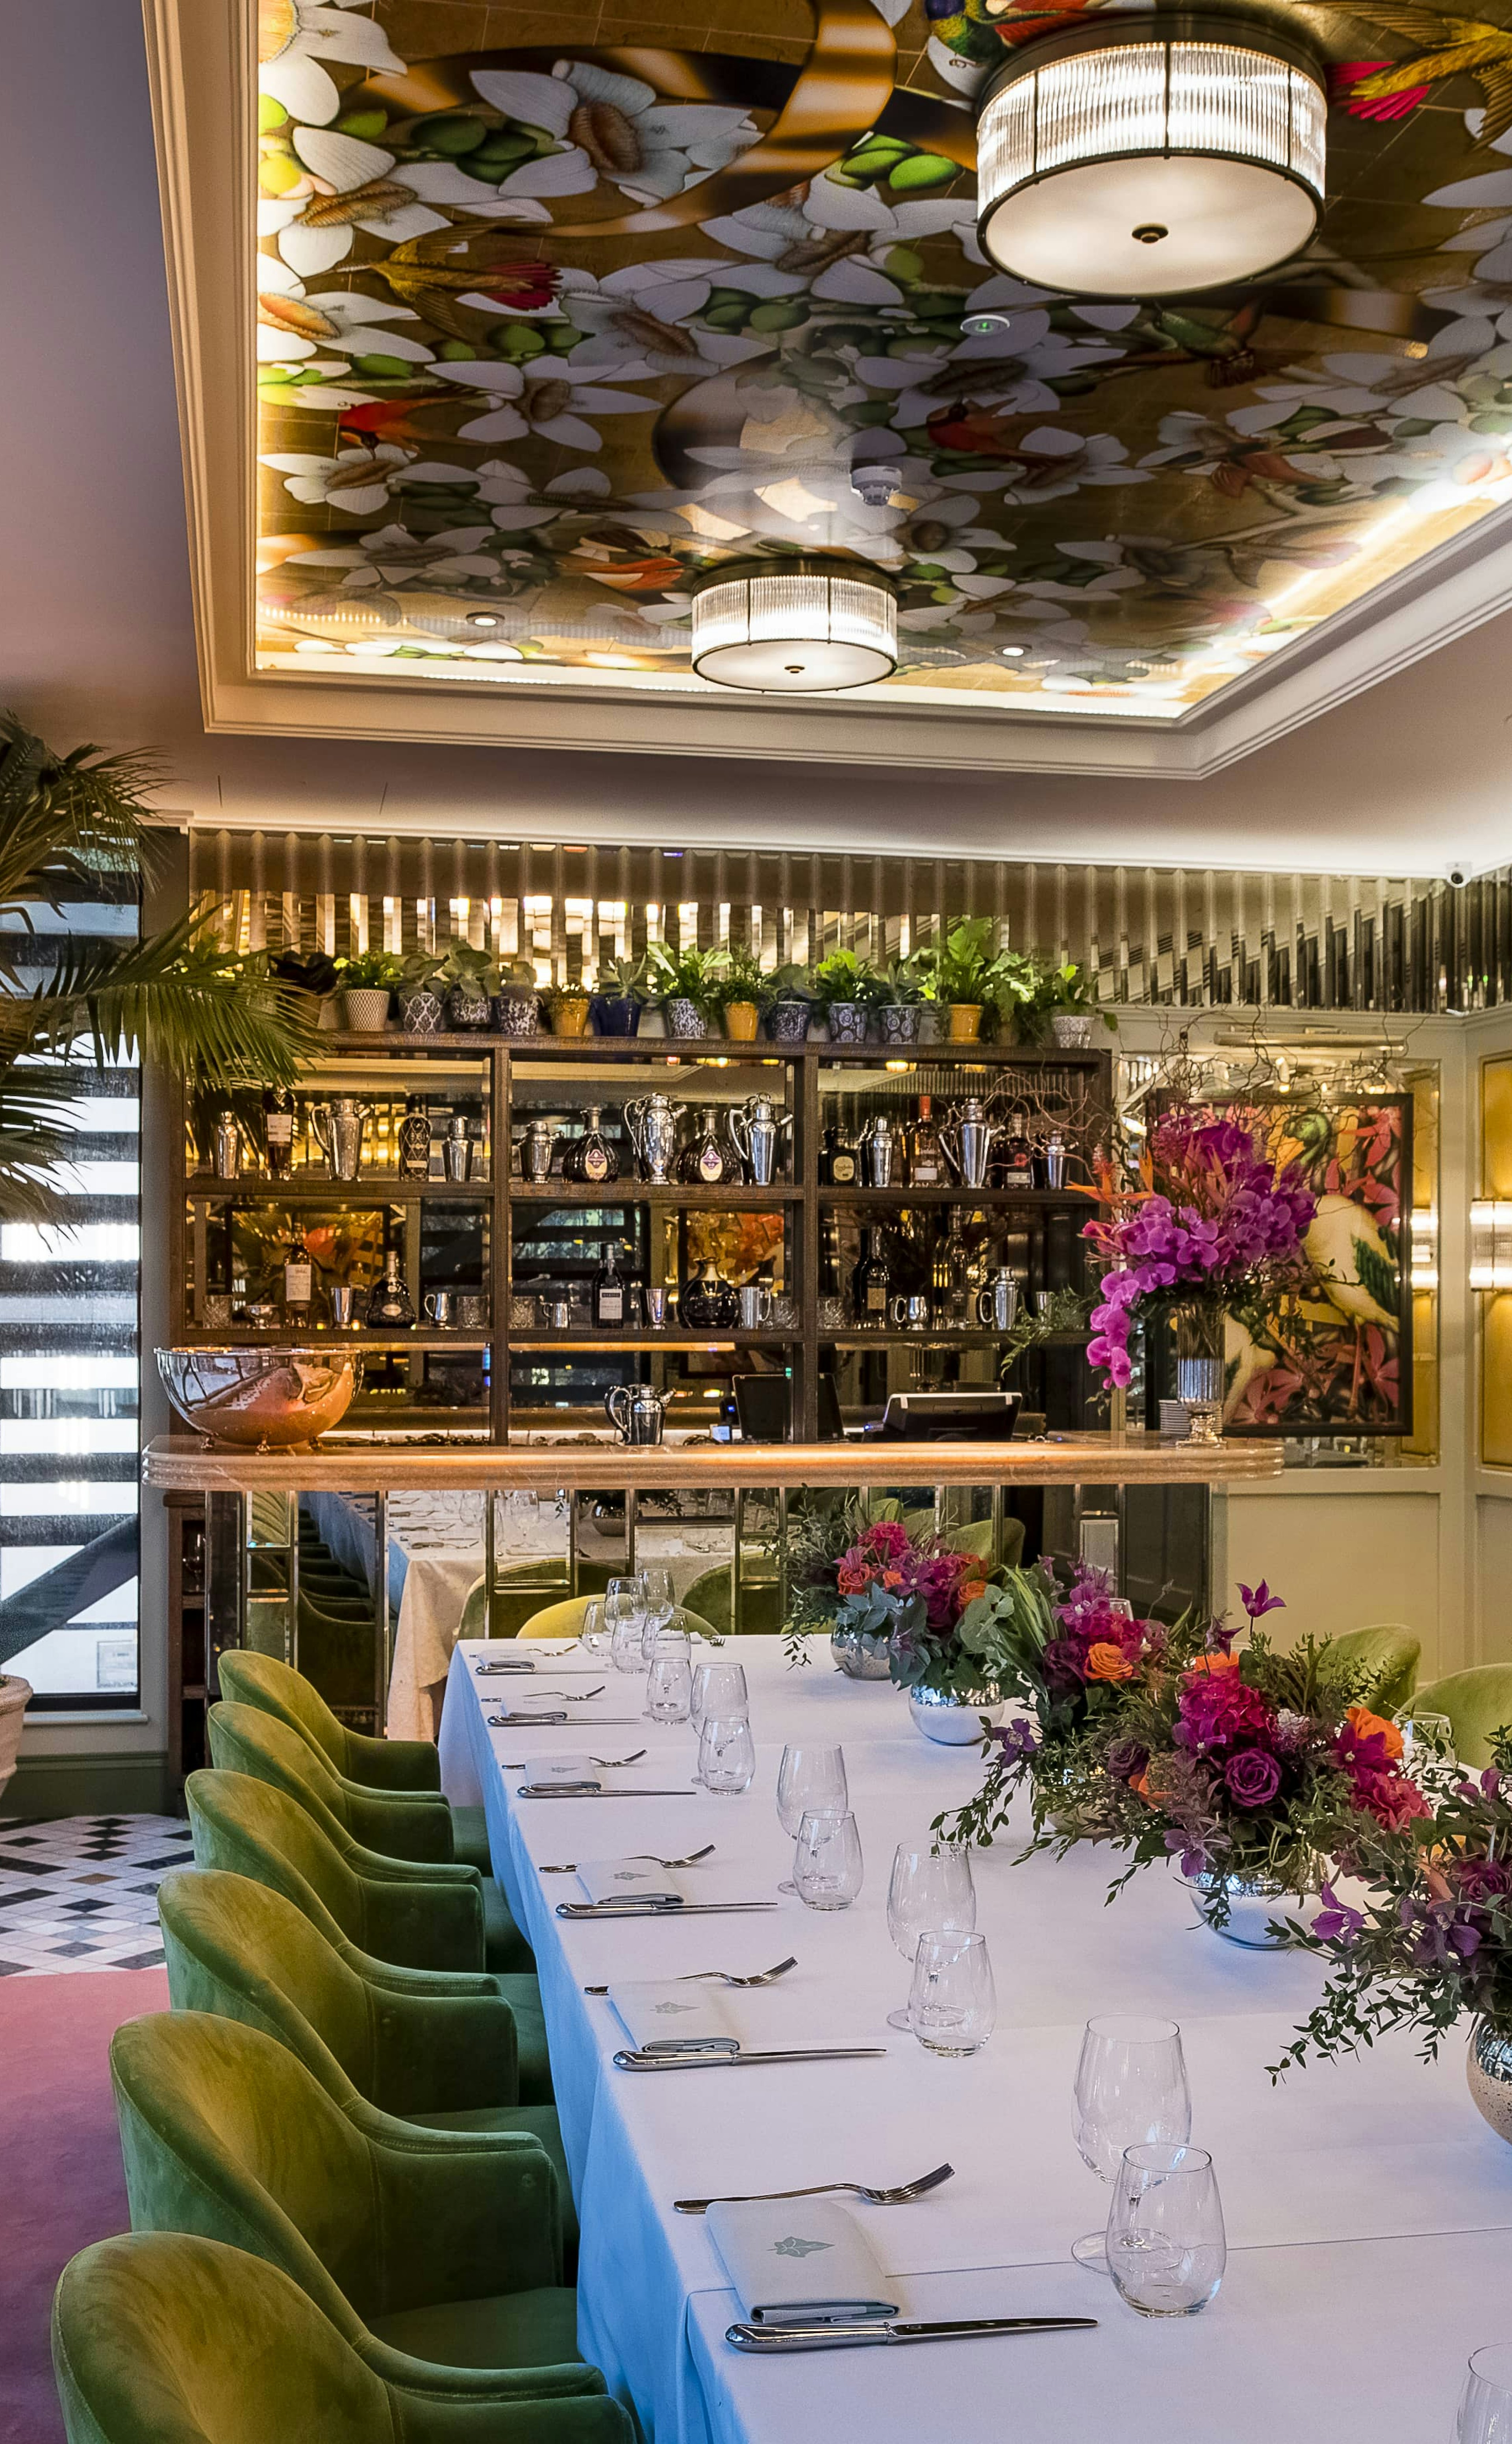 Classy Restaurants - The Ivy Spinningfields